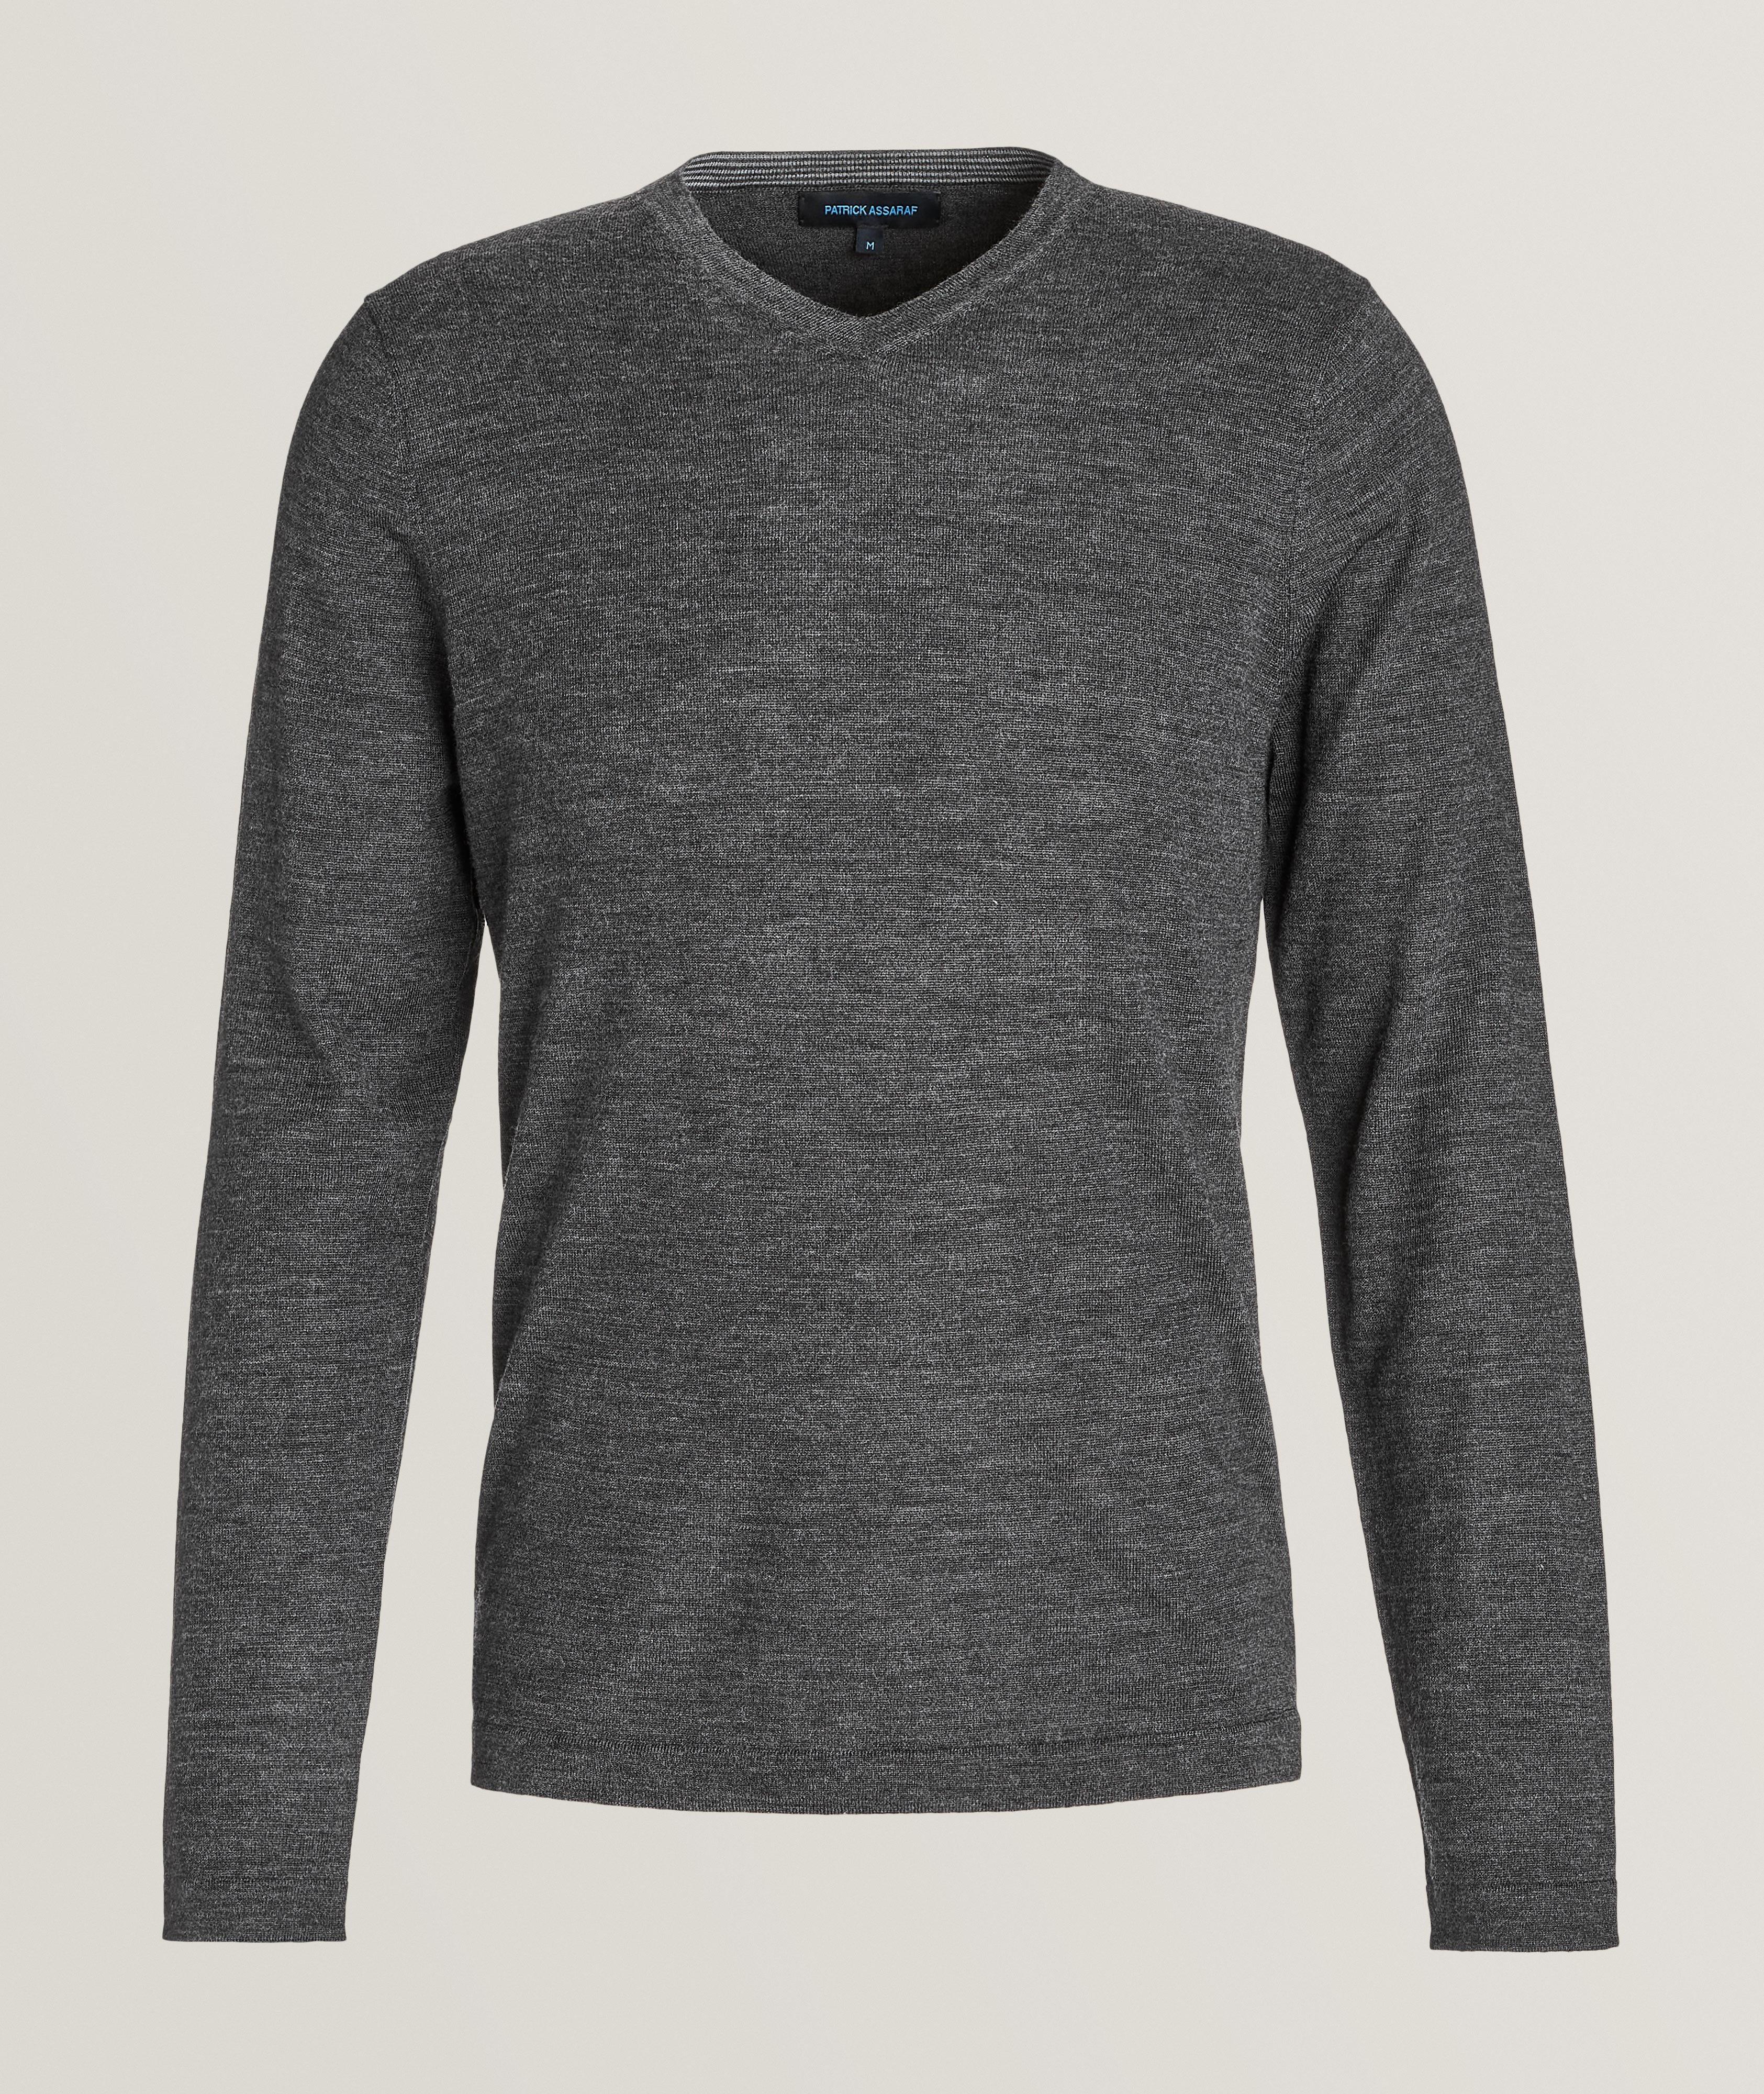 Patrick Assaraf Extra-Fine Merino Wool V-Neck Sweater